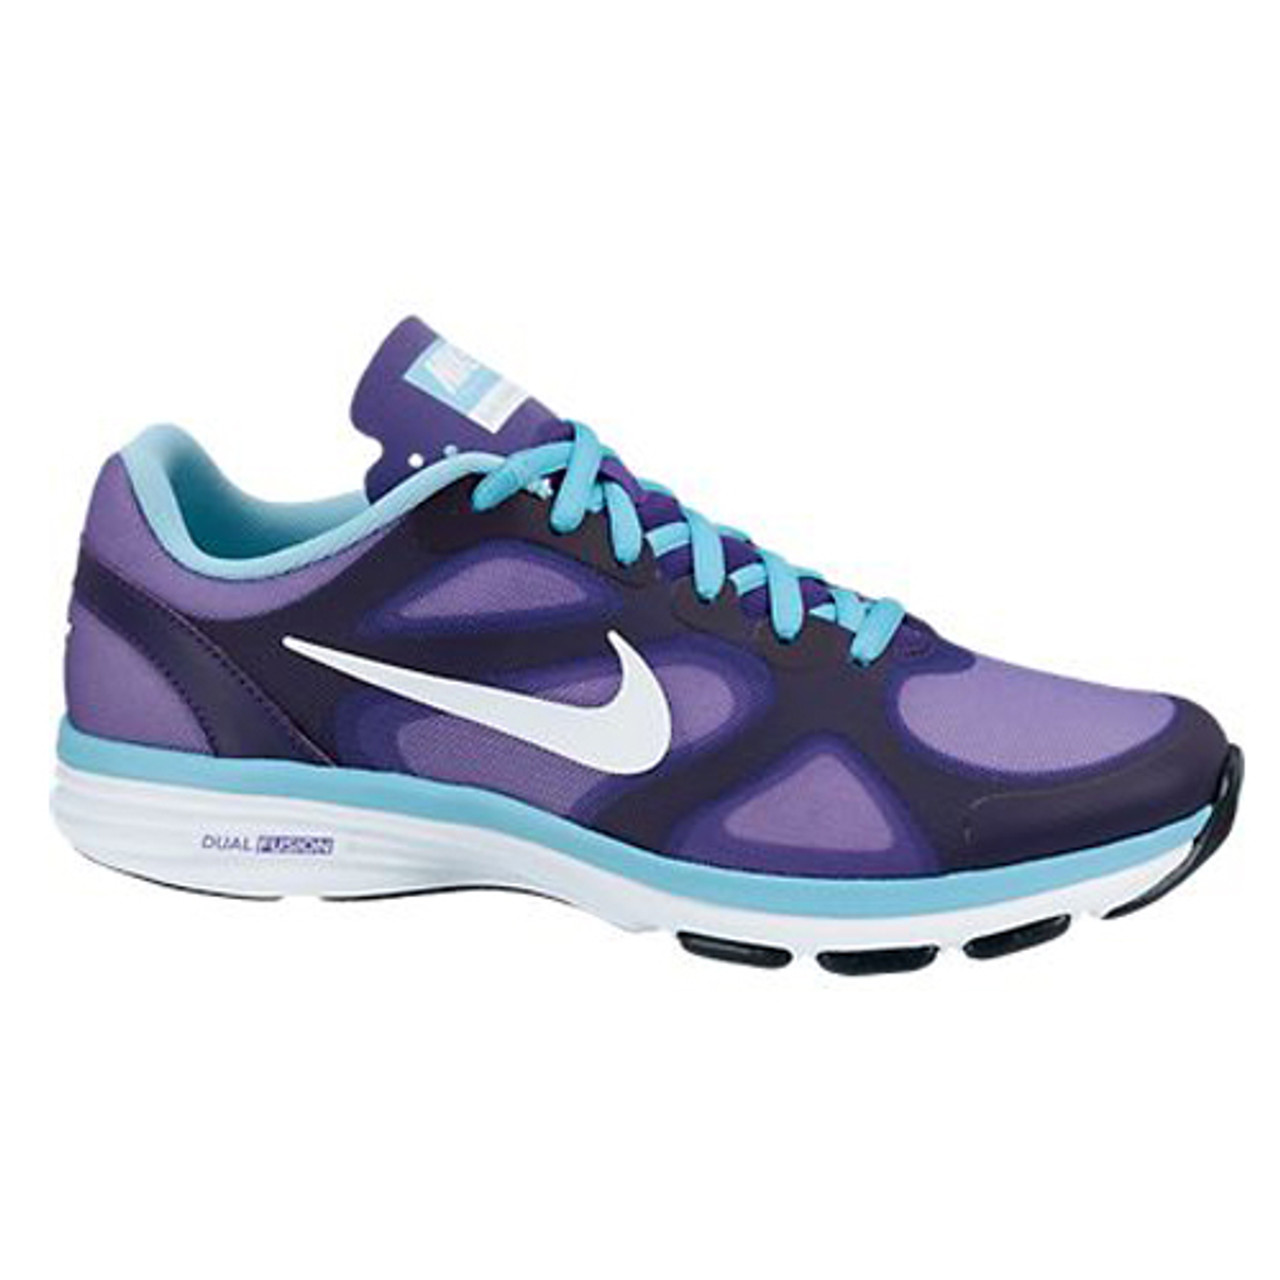 Nike Fusion TR Purple/Blue Ladies Cross Trainers - Electro Purple/Gamma Blue/Black/White | Discount Nike Ladies Athletic More - Shoolu.com | Shoolu.com